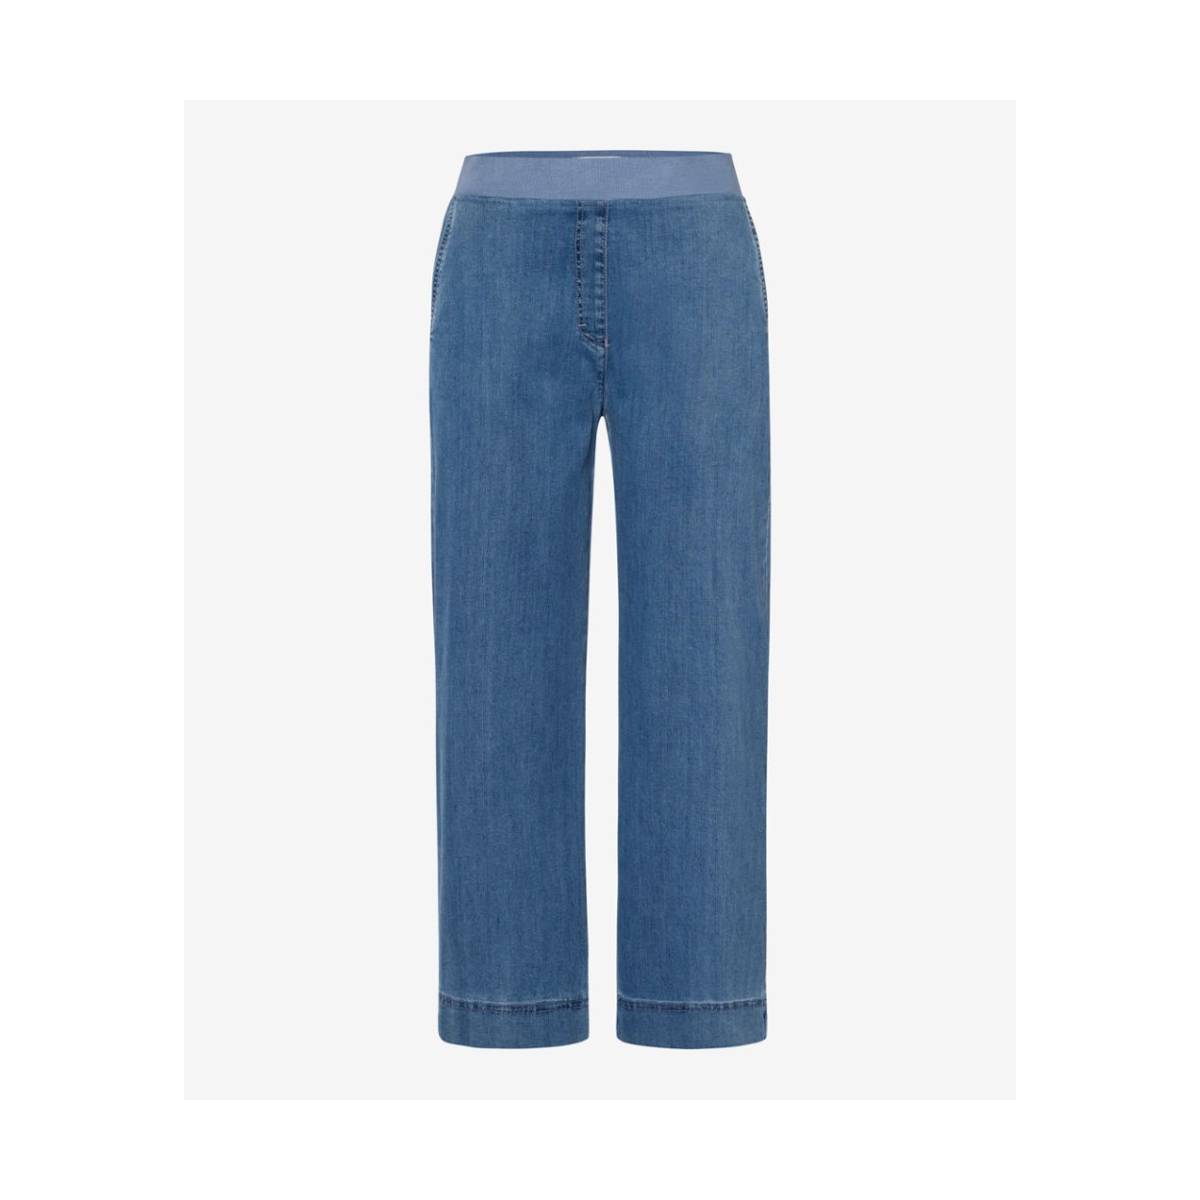 RAPHAELA  broeken lichte jeans -  model 14-6308 10912220 - Dameskleding broeken jeans